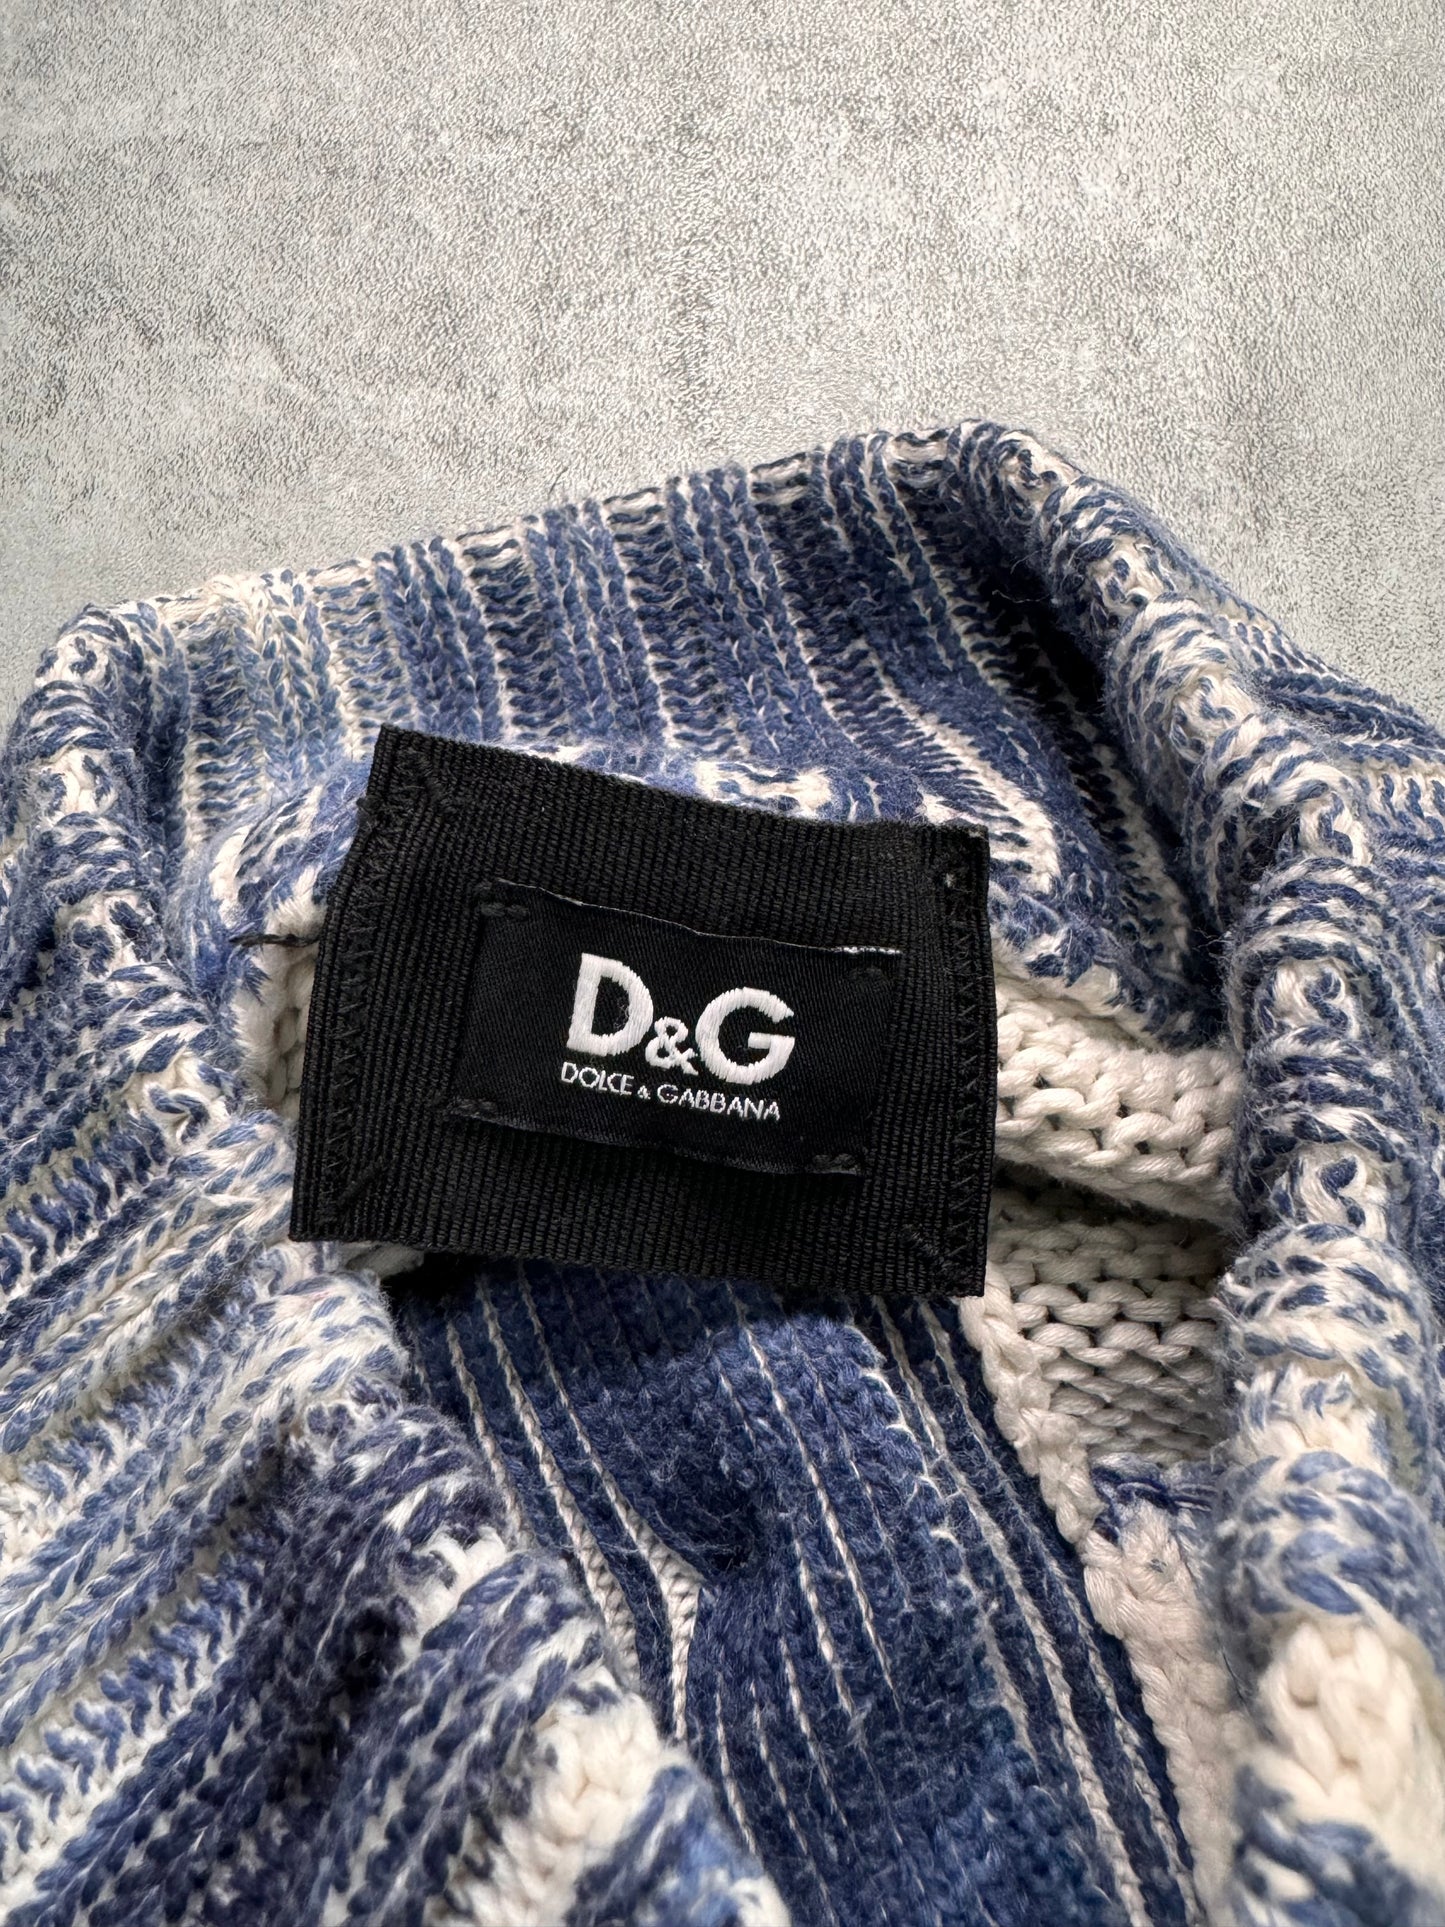 Dolce & Gabbana Iceberg Overprint Sweater (XL)